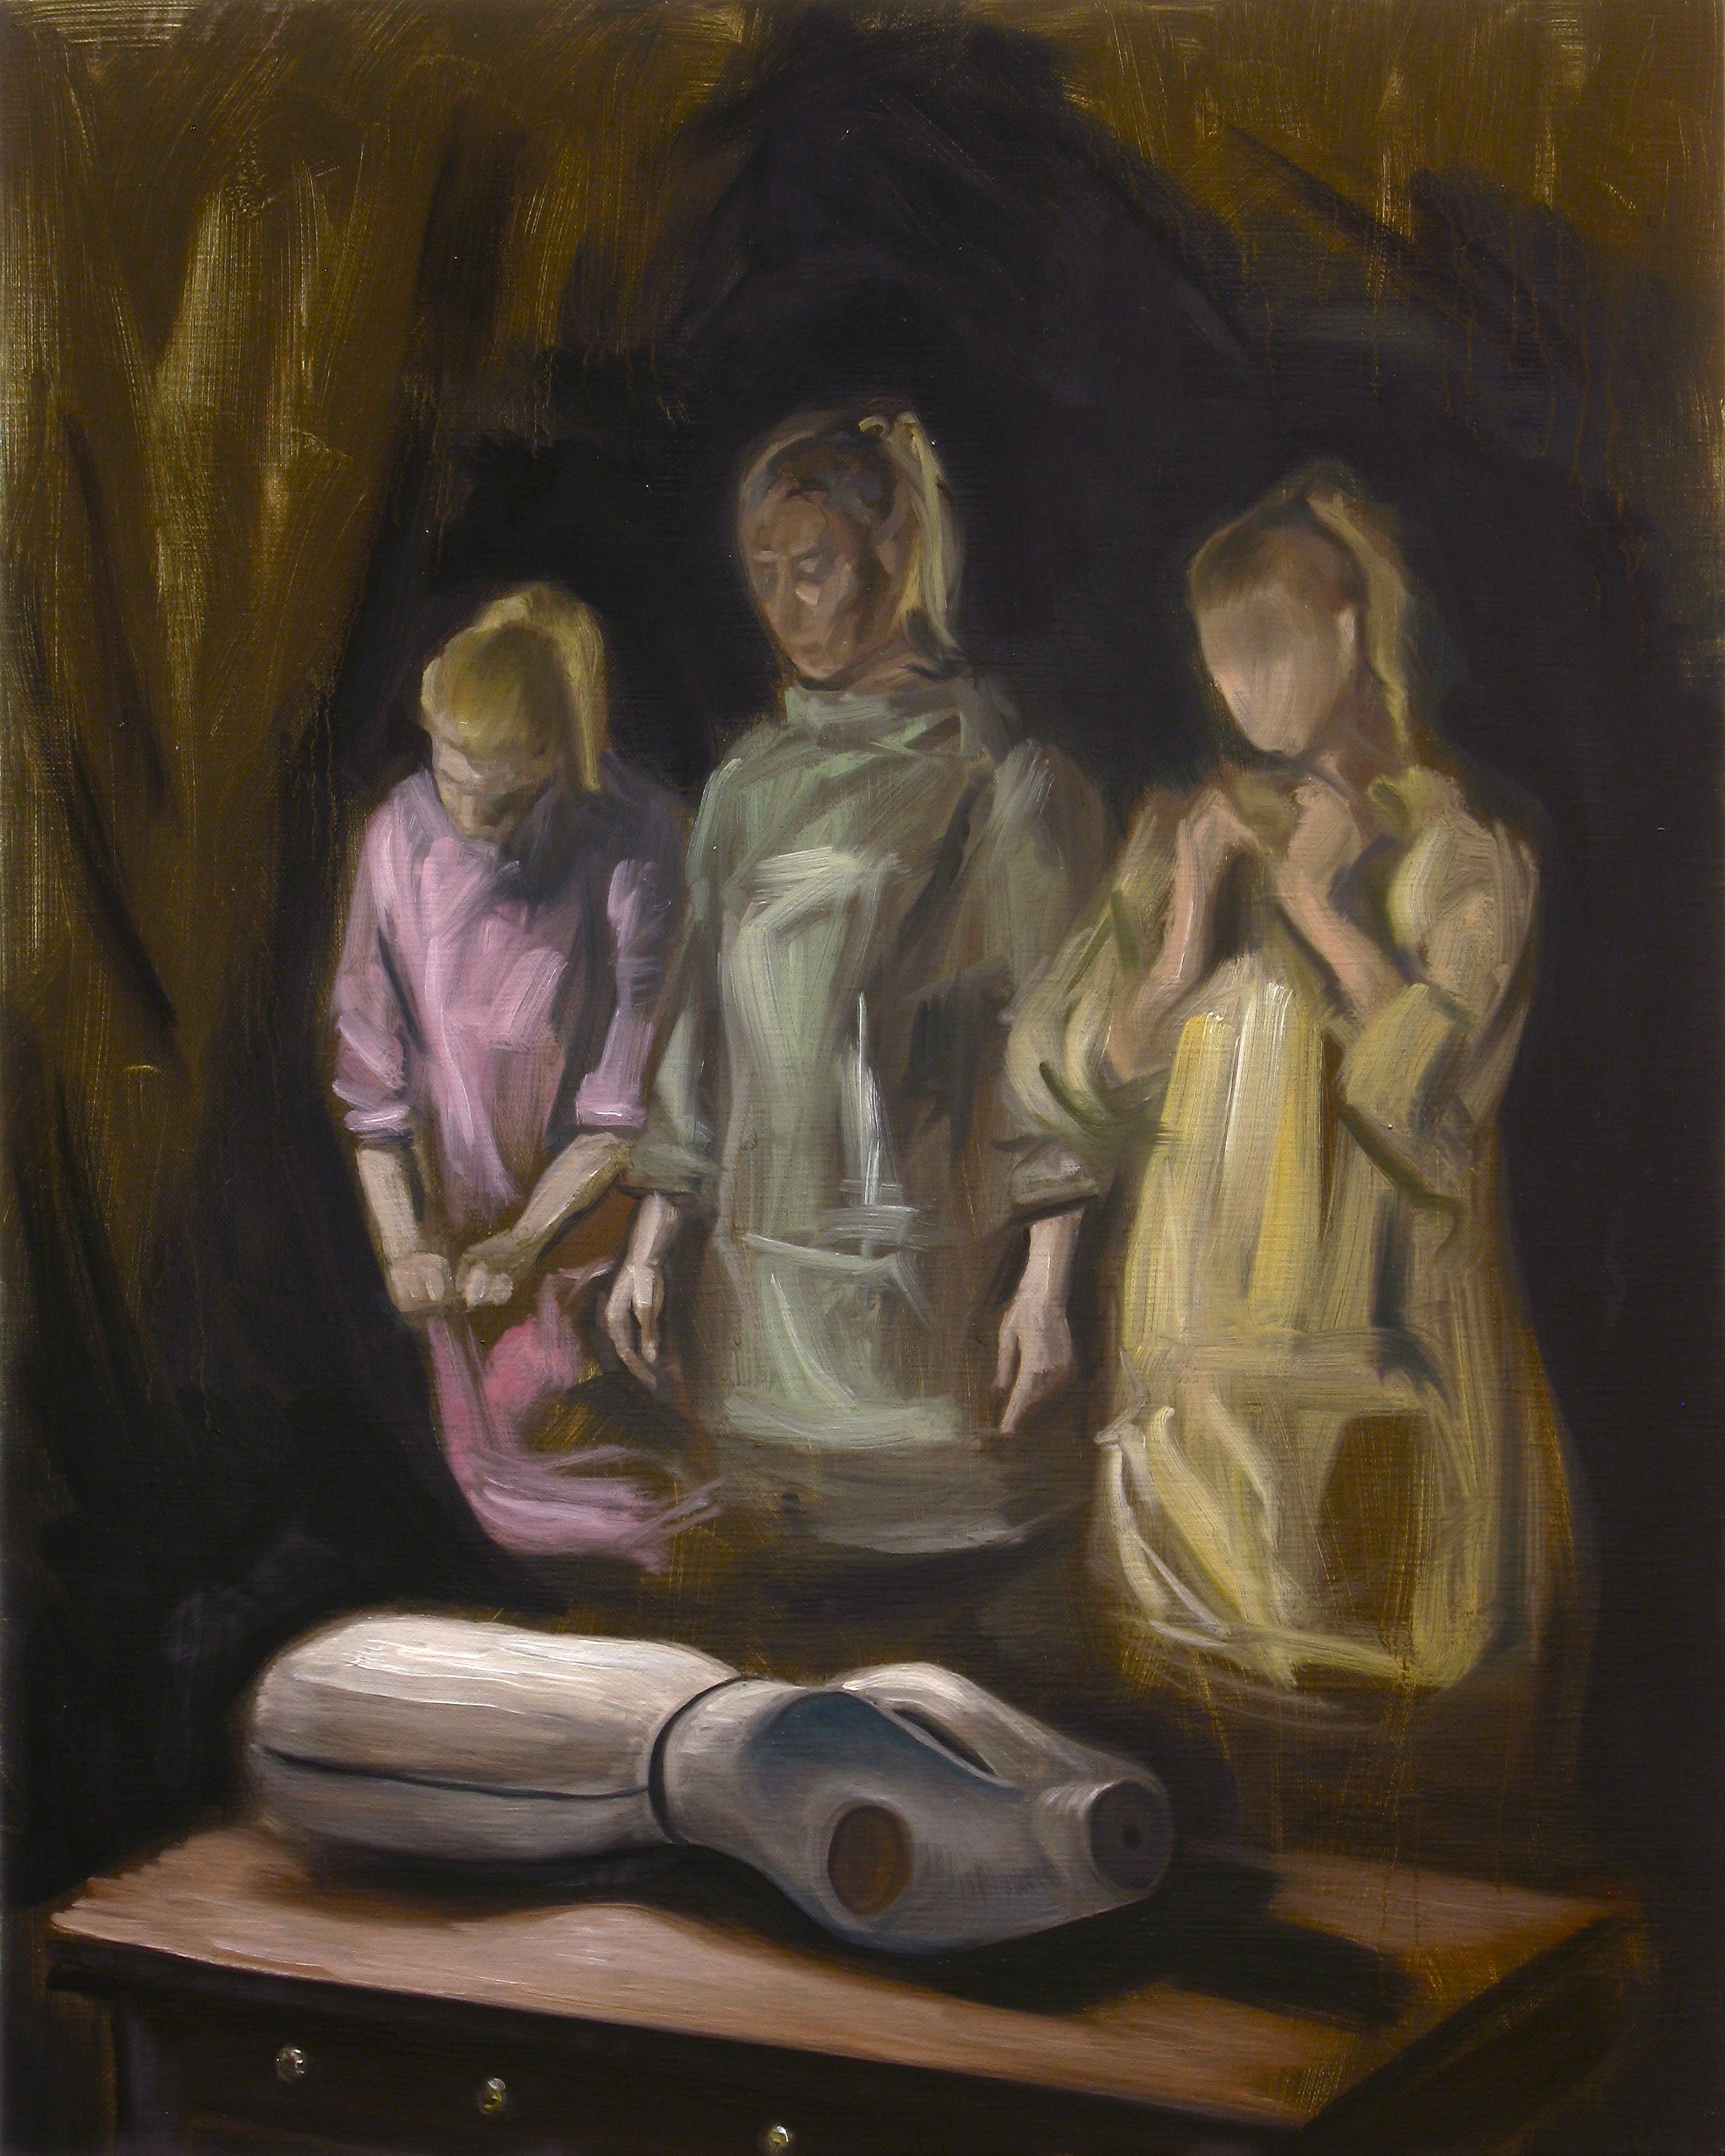 The Three, Oil on linen, 50 x 40cm, 2013